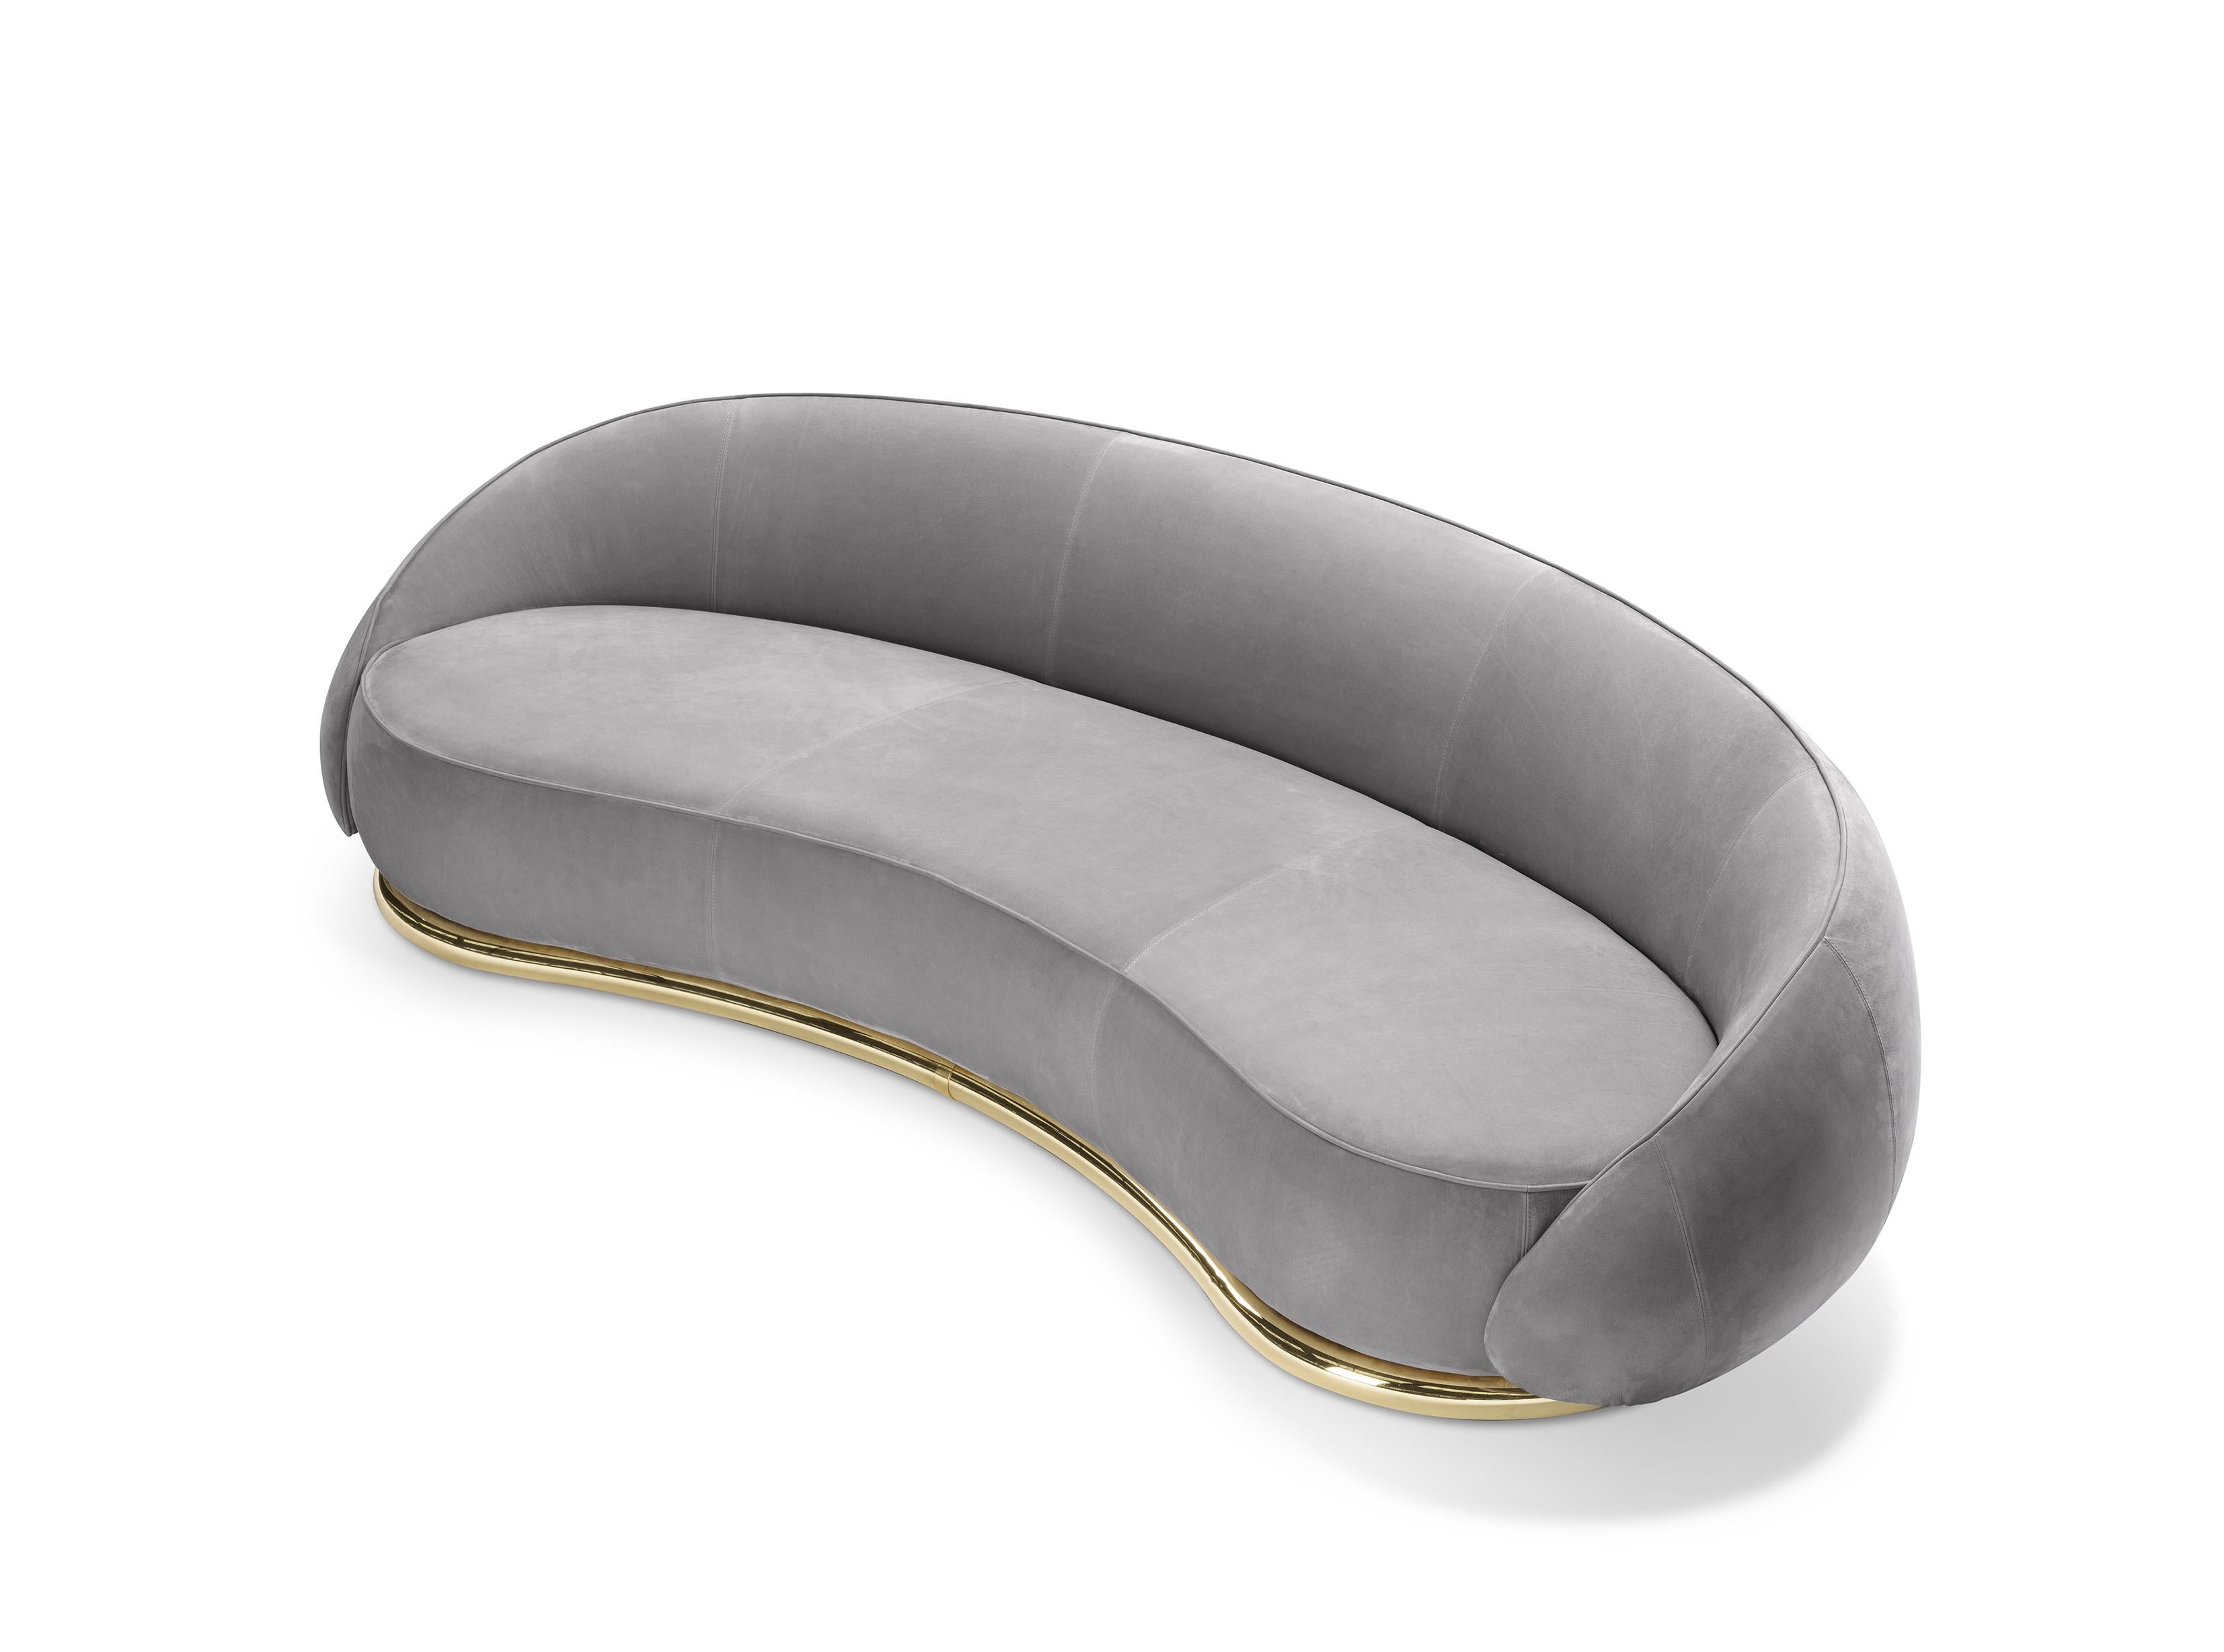 Italian Ghidini 1961 Abbracci 3-Seat Sofa in Grey Leather and Brass Base by L. Bozzoli For Sale